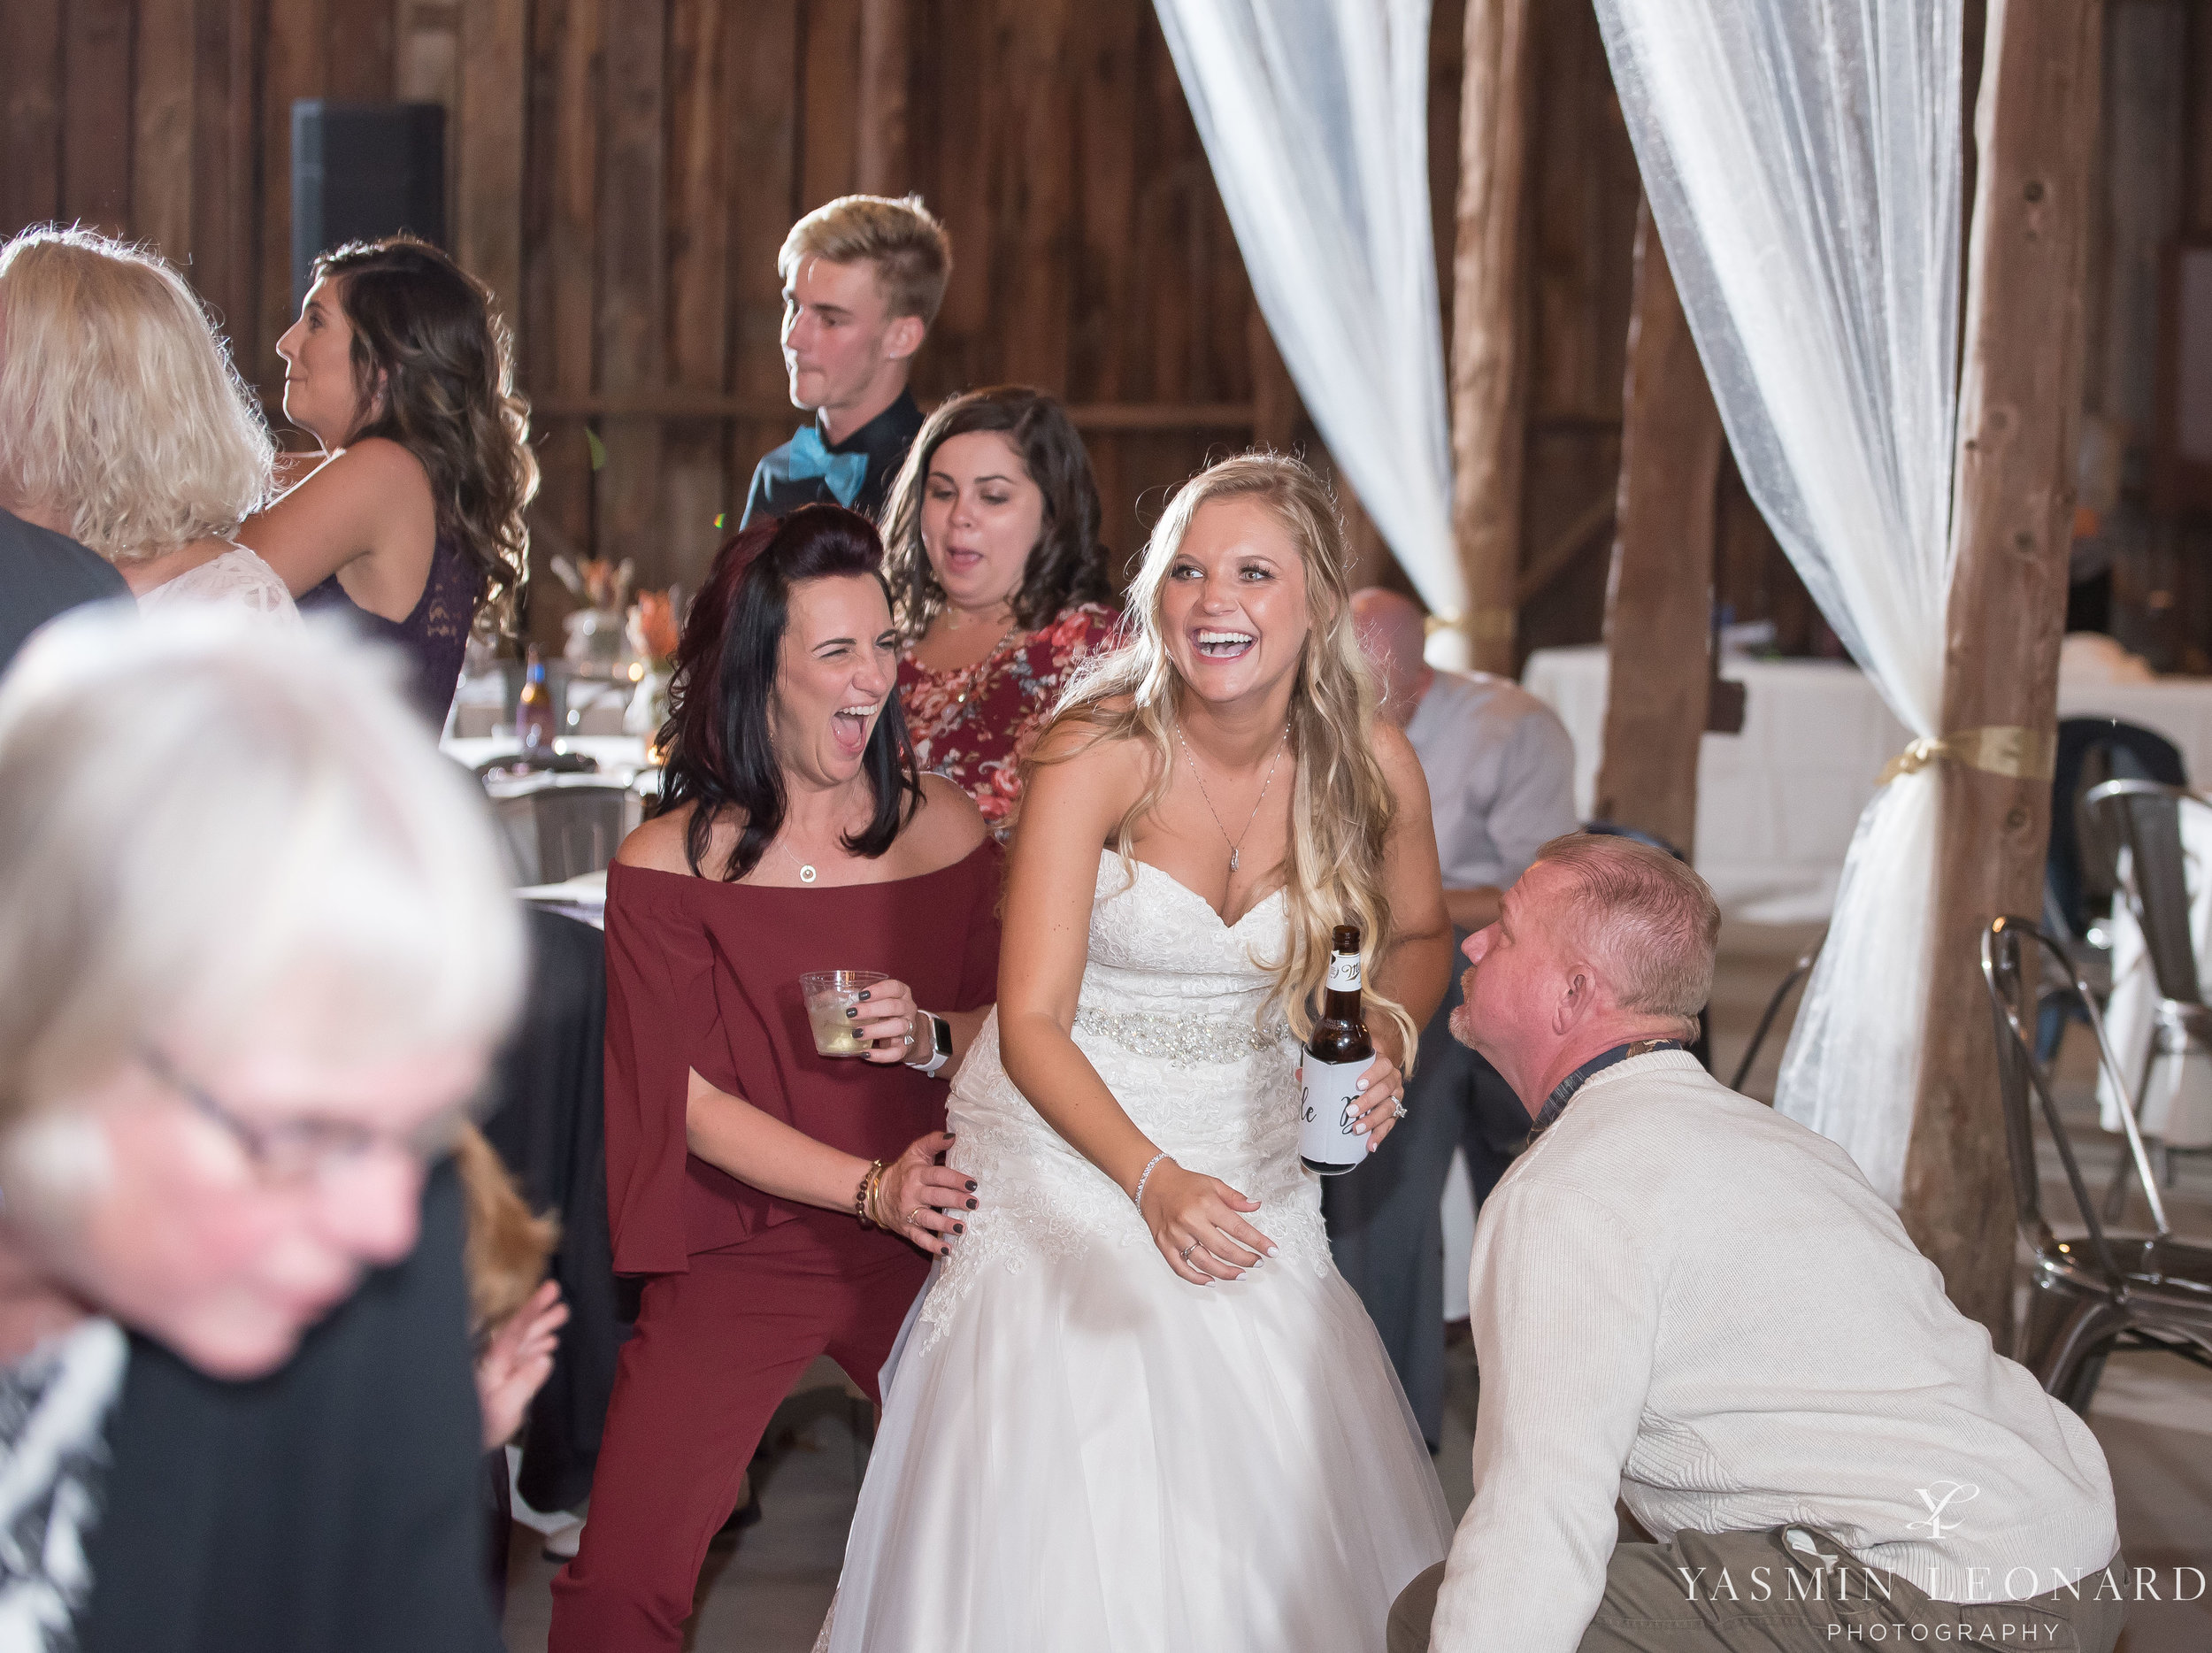 NC Wedding Photographer - Yasmin Leonard Photography - Summerfield Farms - High Point Wedding Photographer - Labri at Linwood - Barns in North Carolina - NC Barn Wedding-72.jpg